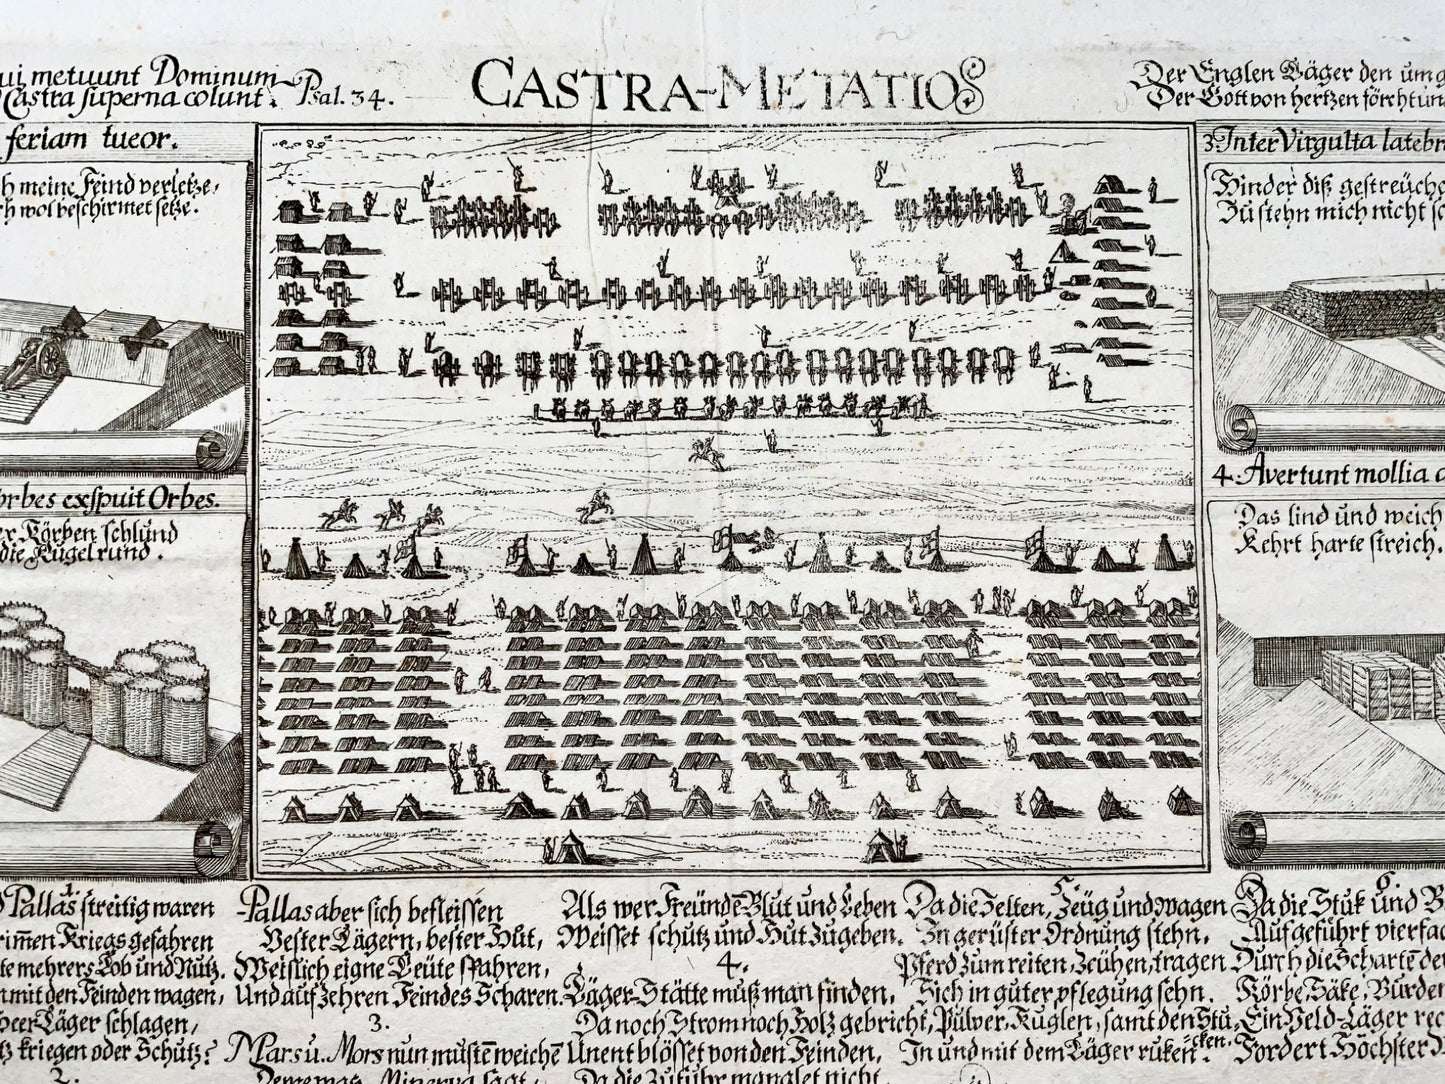 1697 Broadside, 'Castra-Metatio', formation d'un camp militaire, Suisse